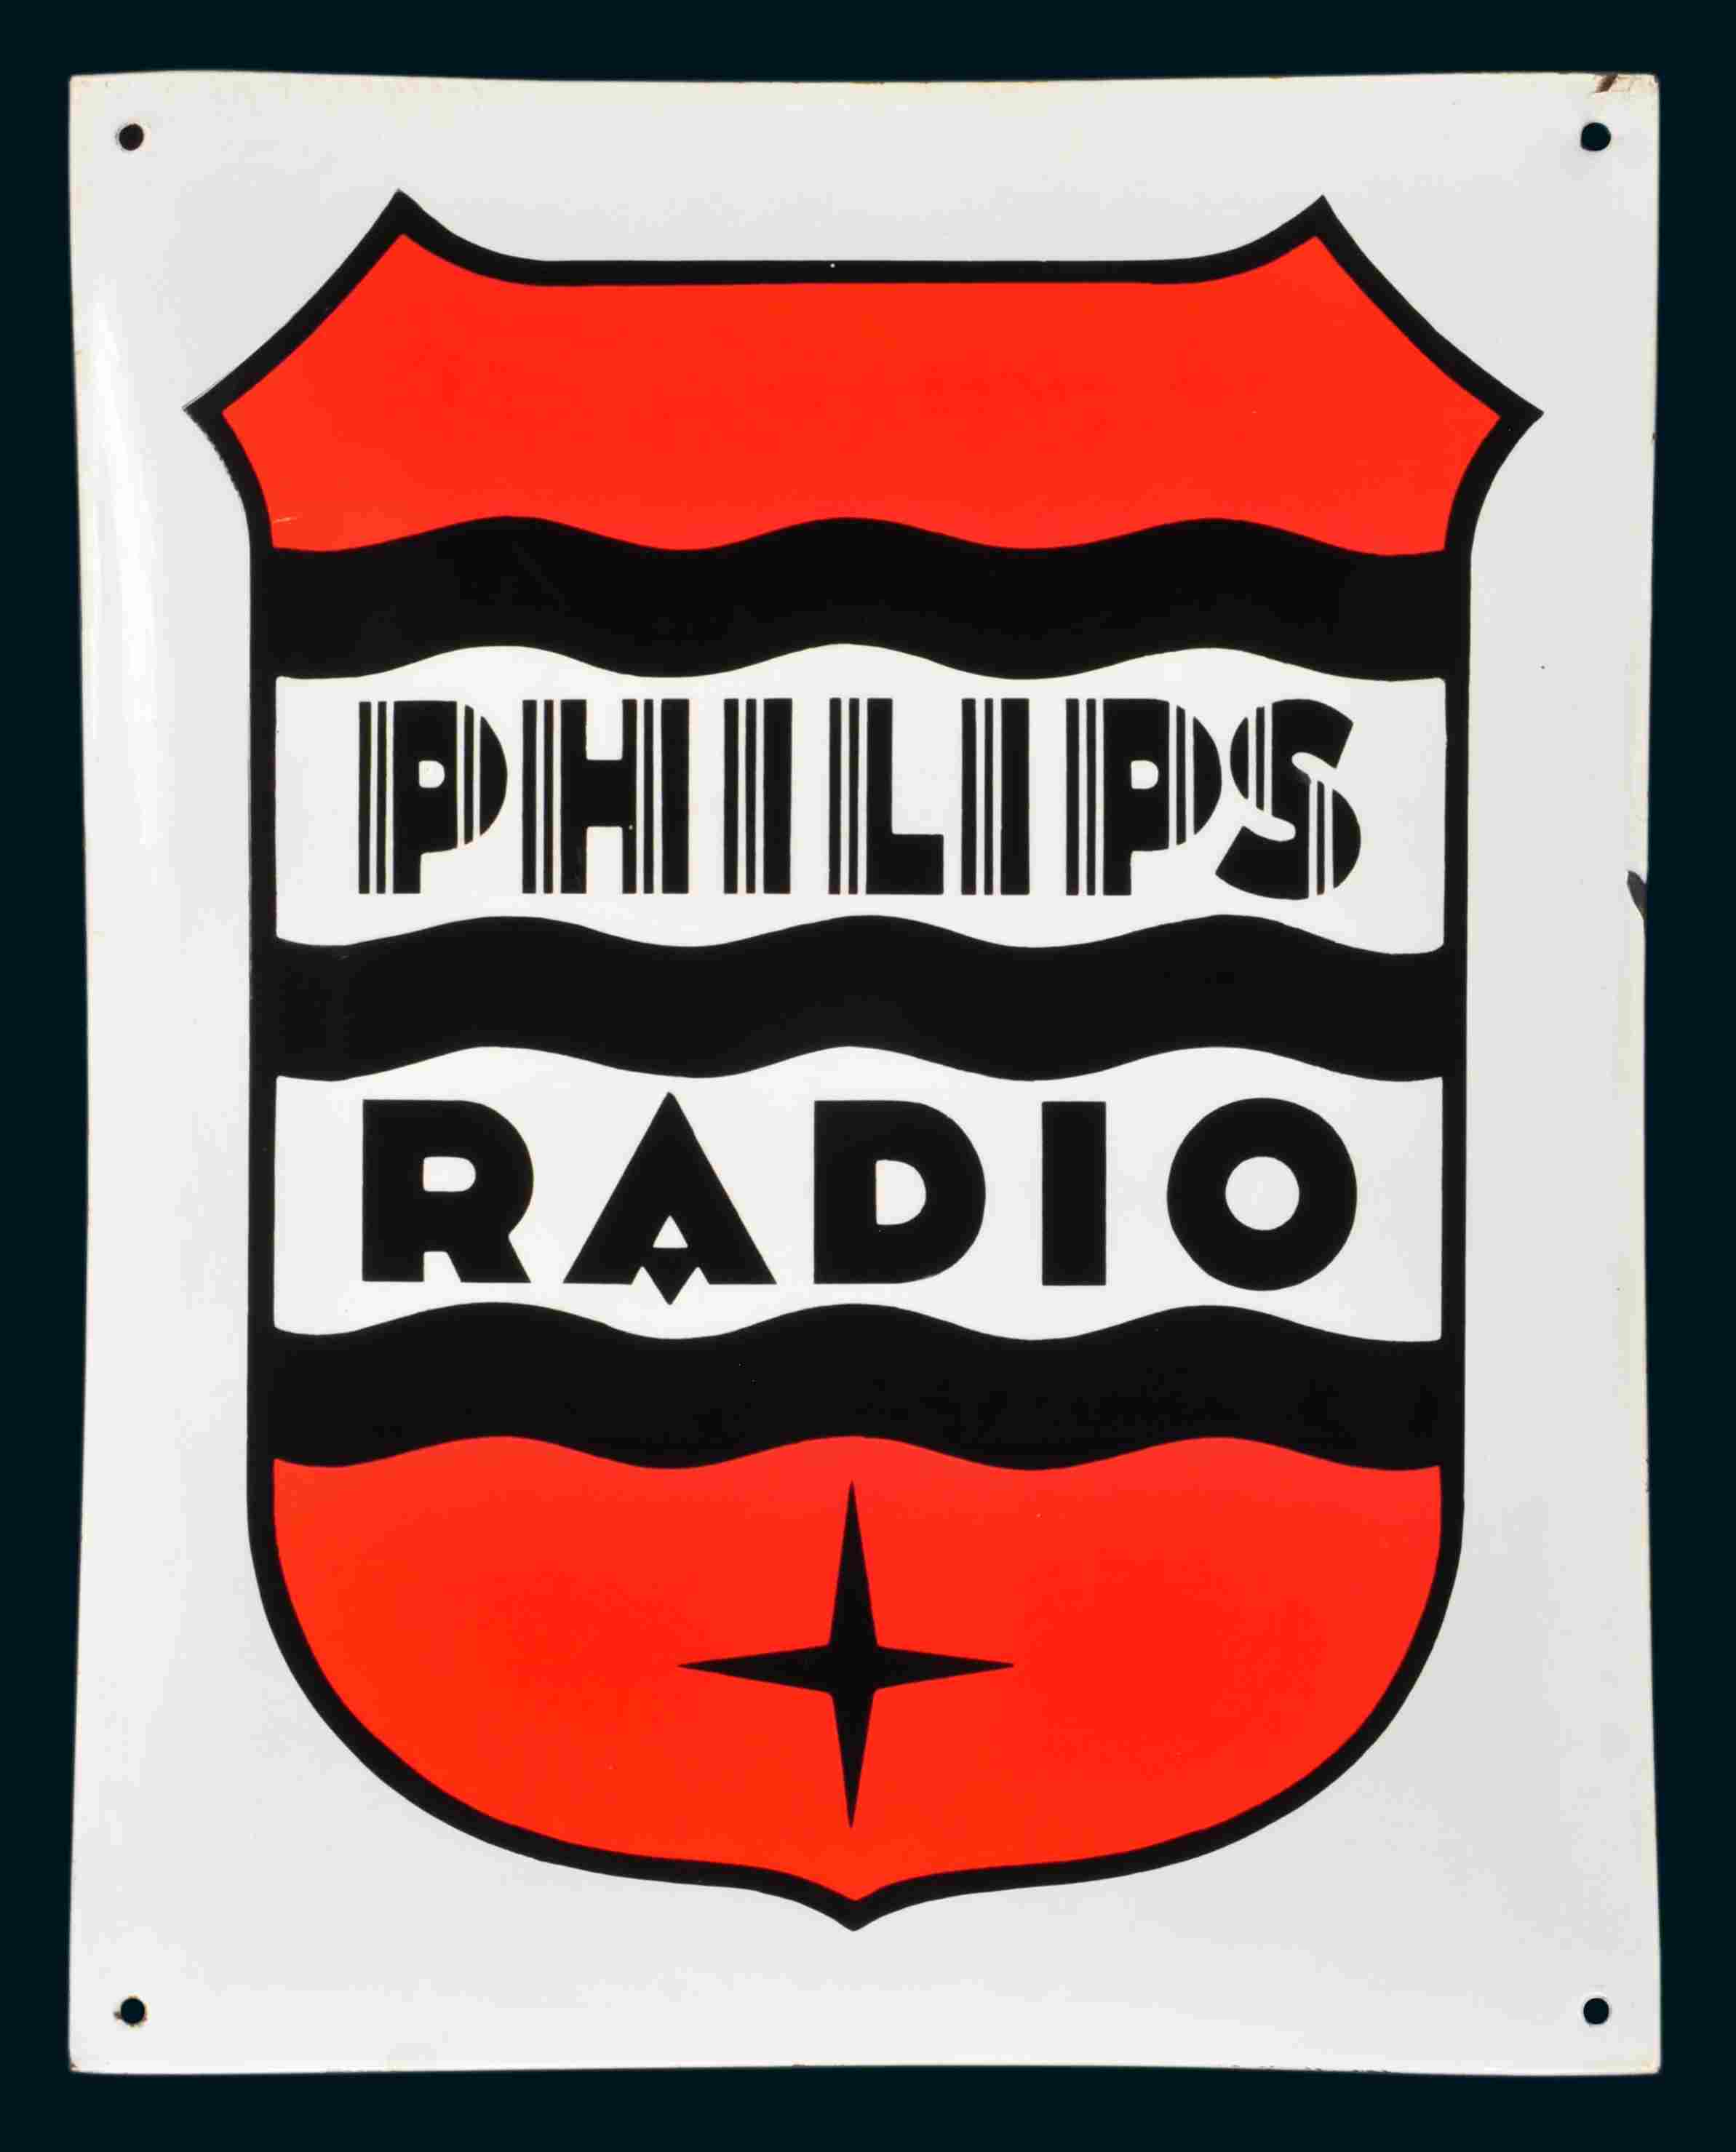 Philips Radio 